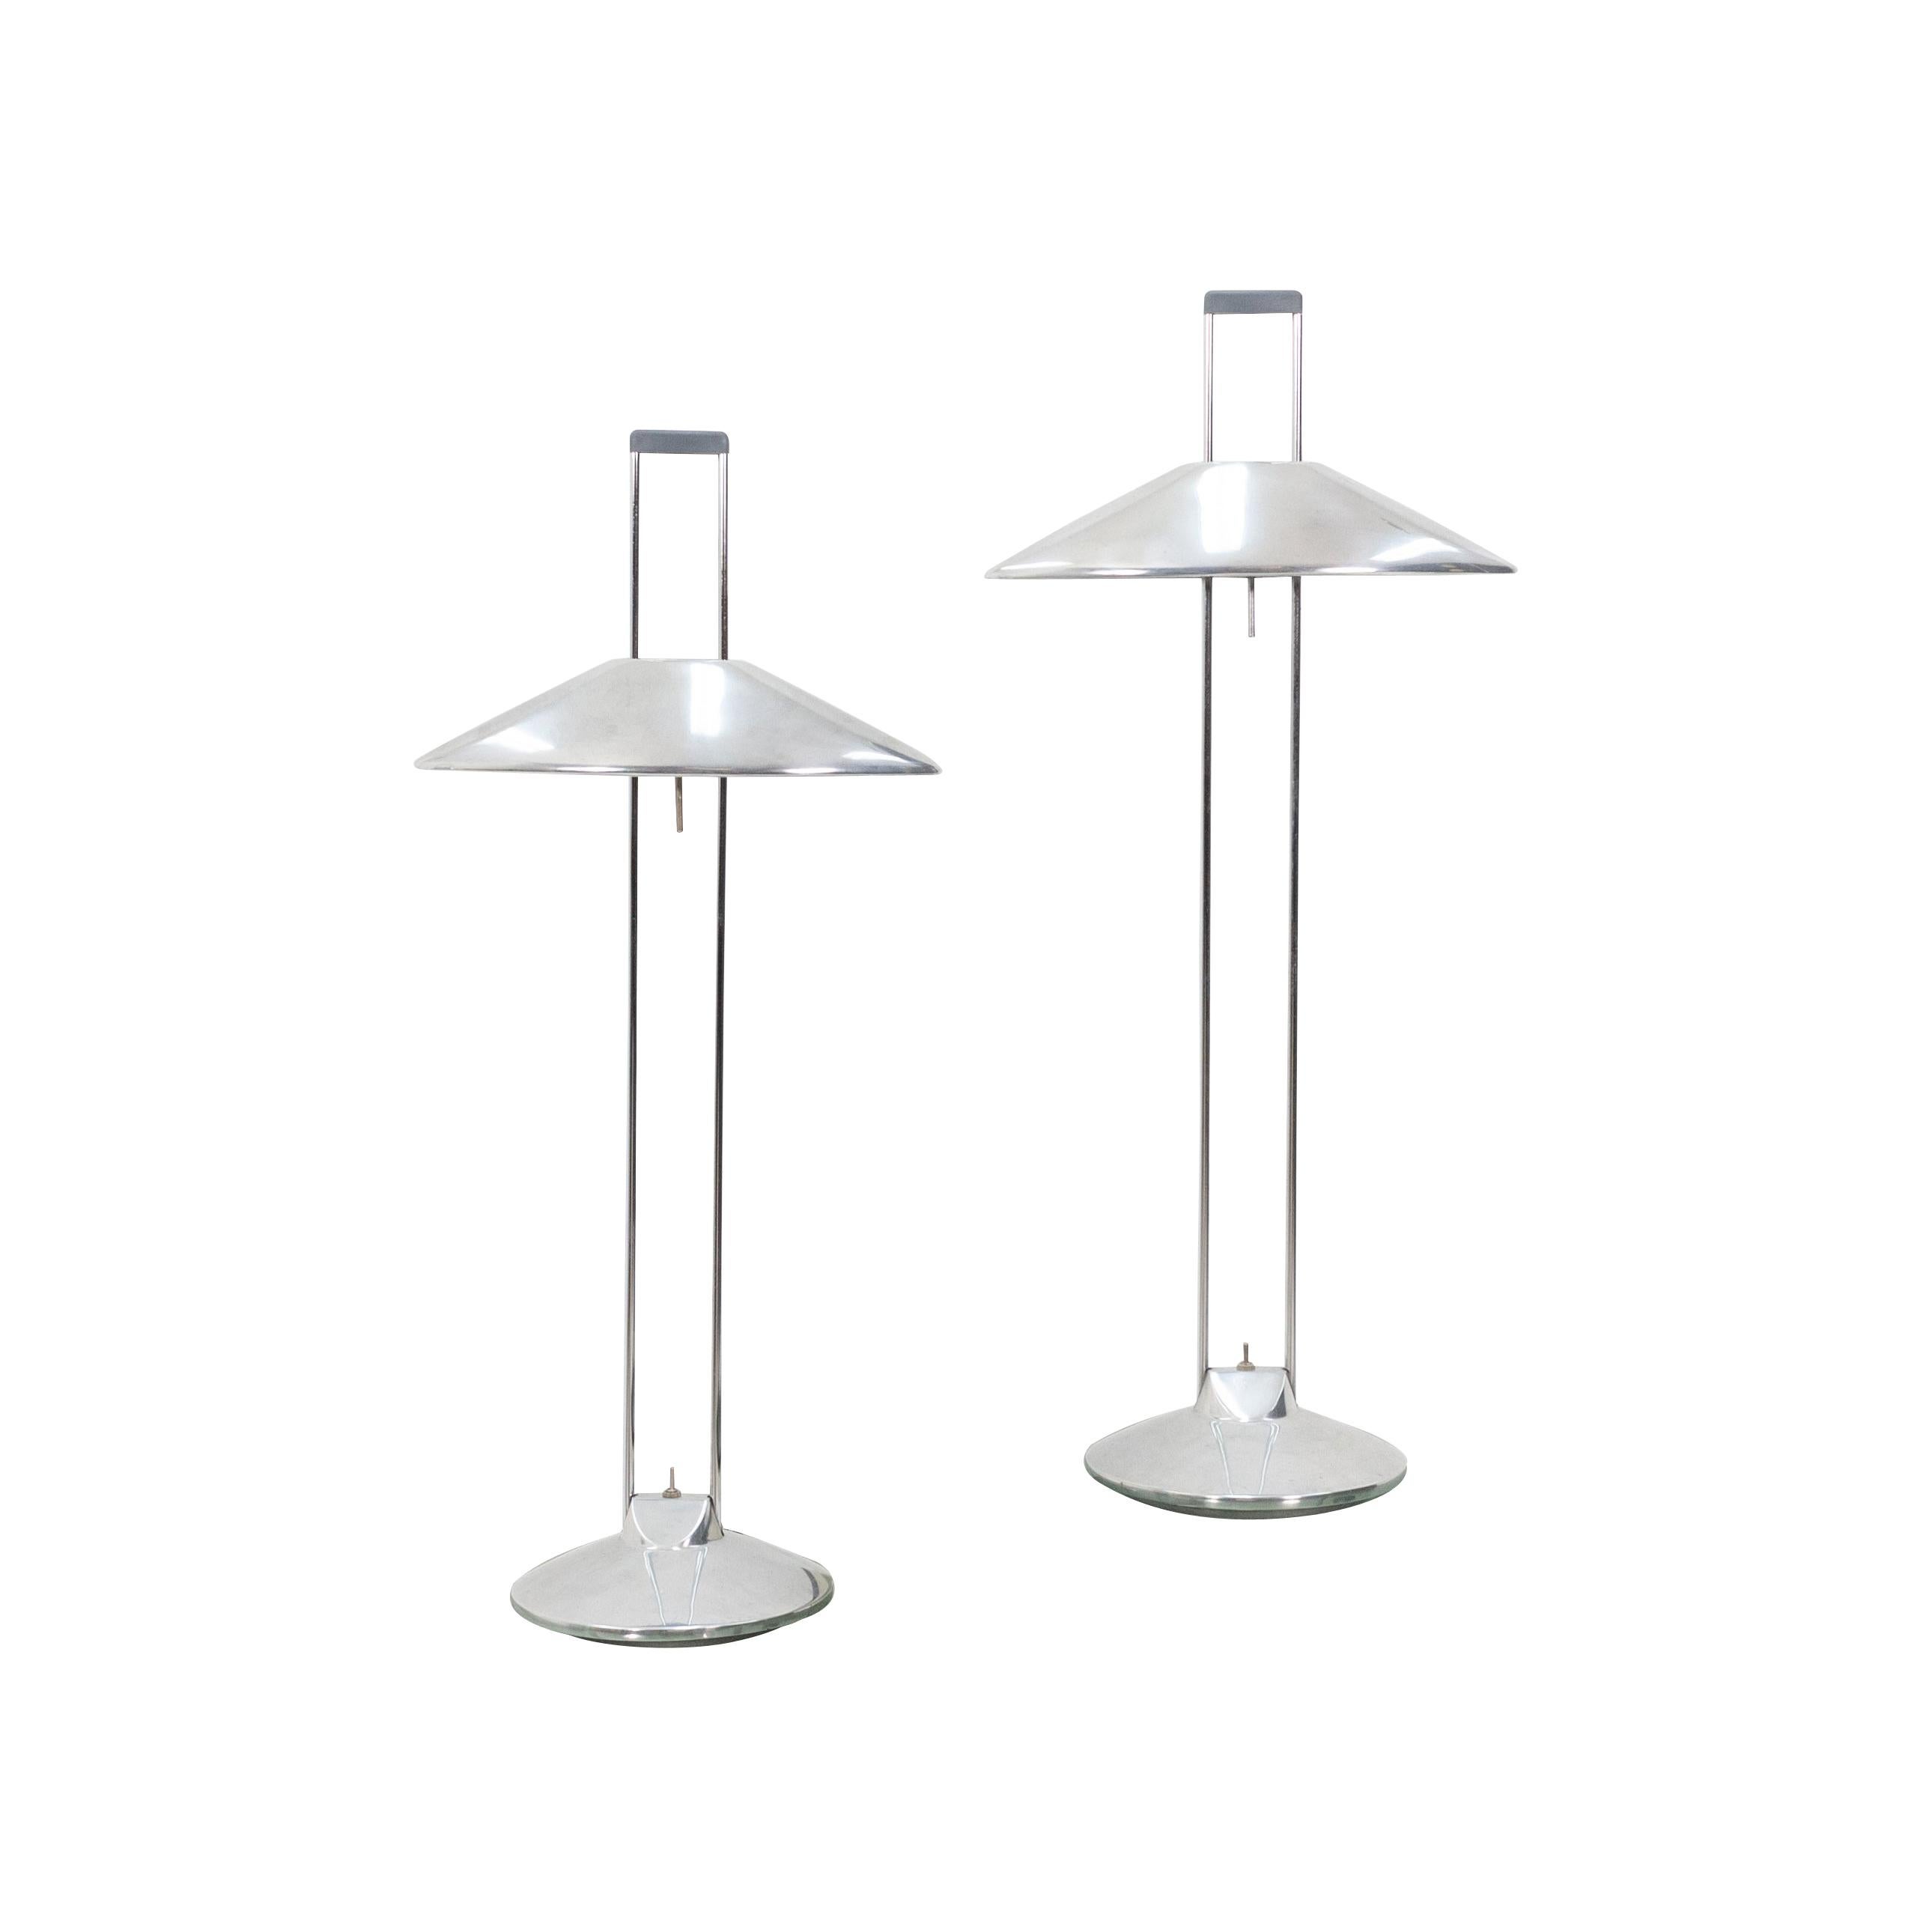 B-Lux Aluminum Table Lamps Jorge Pensi 